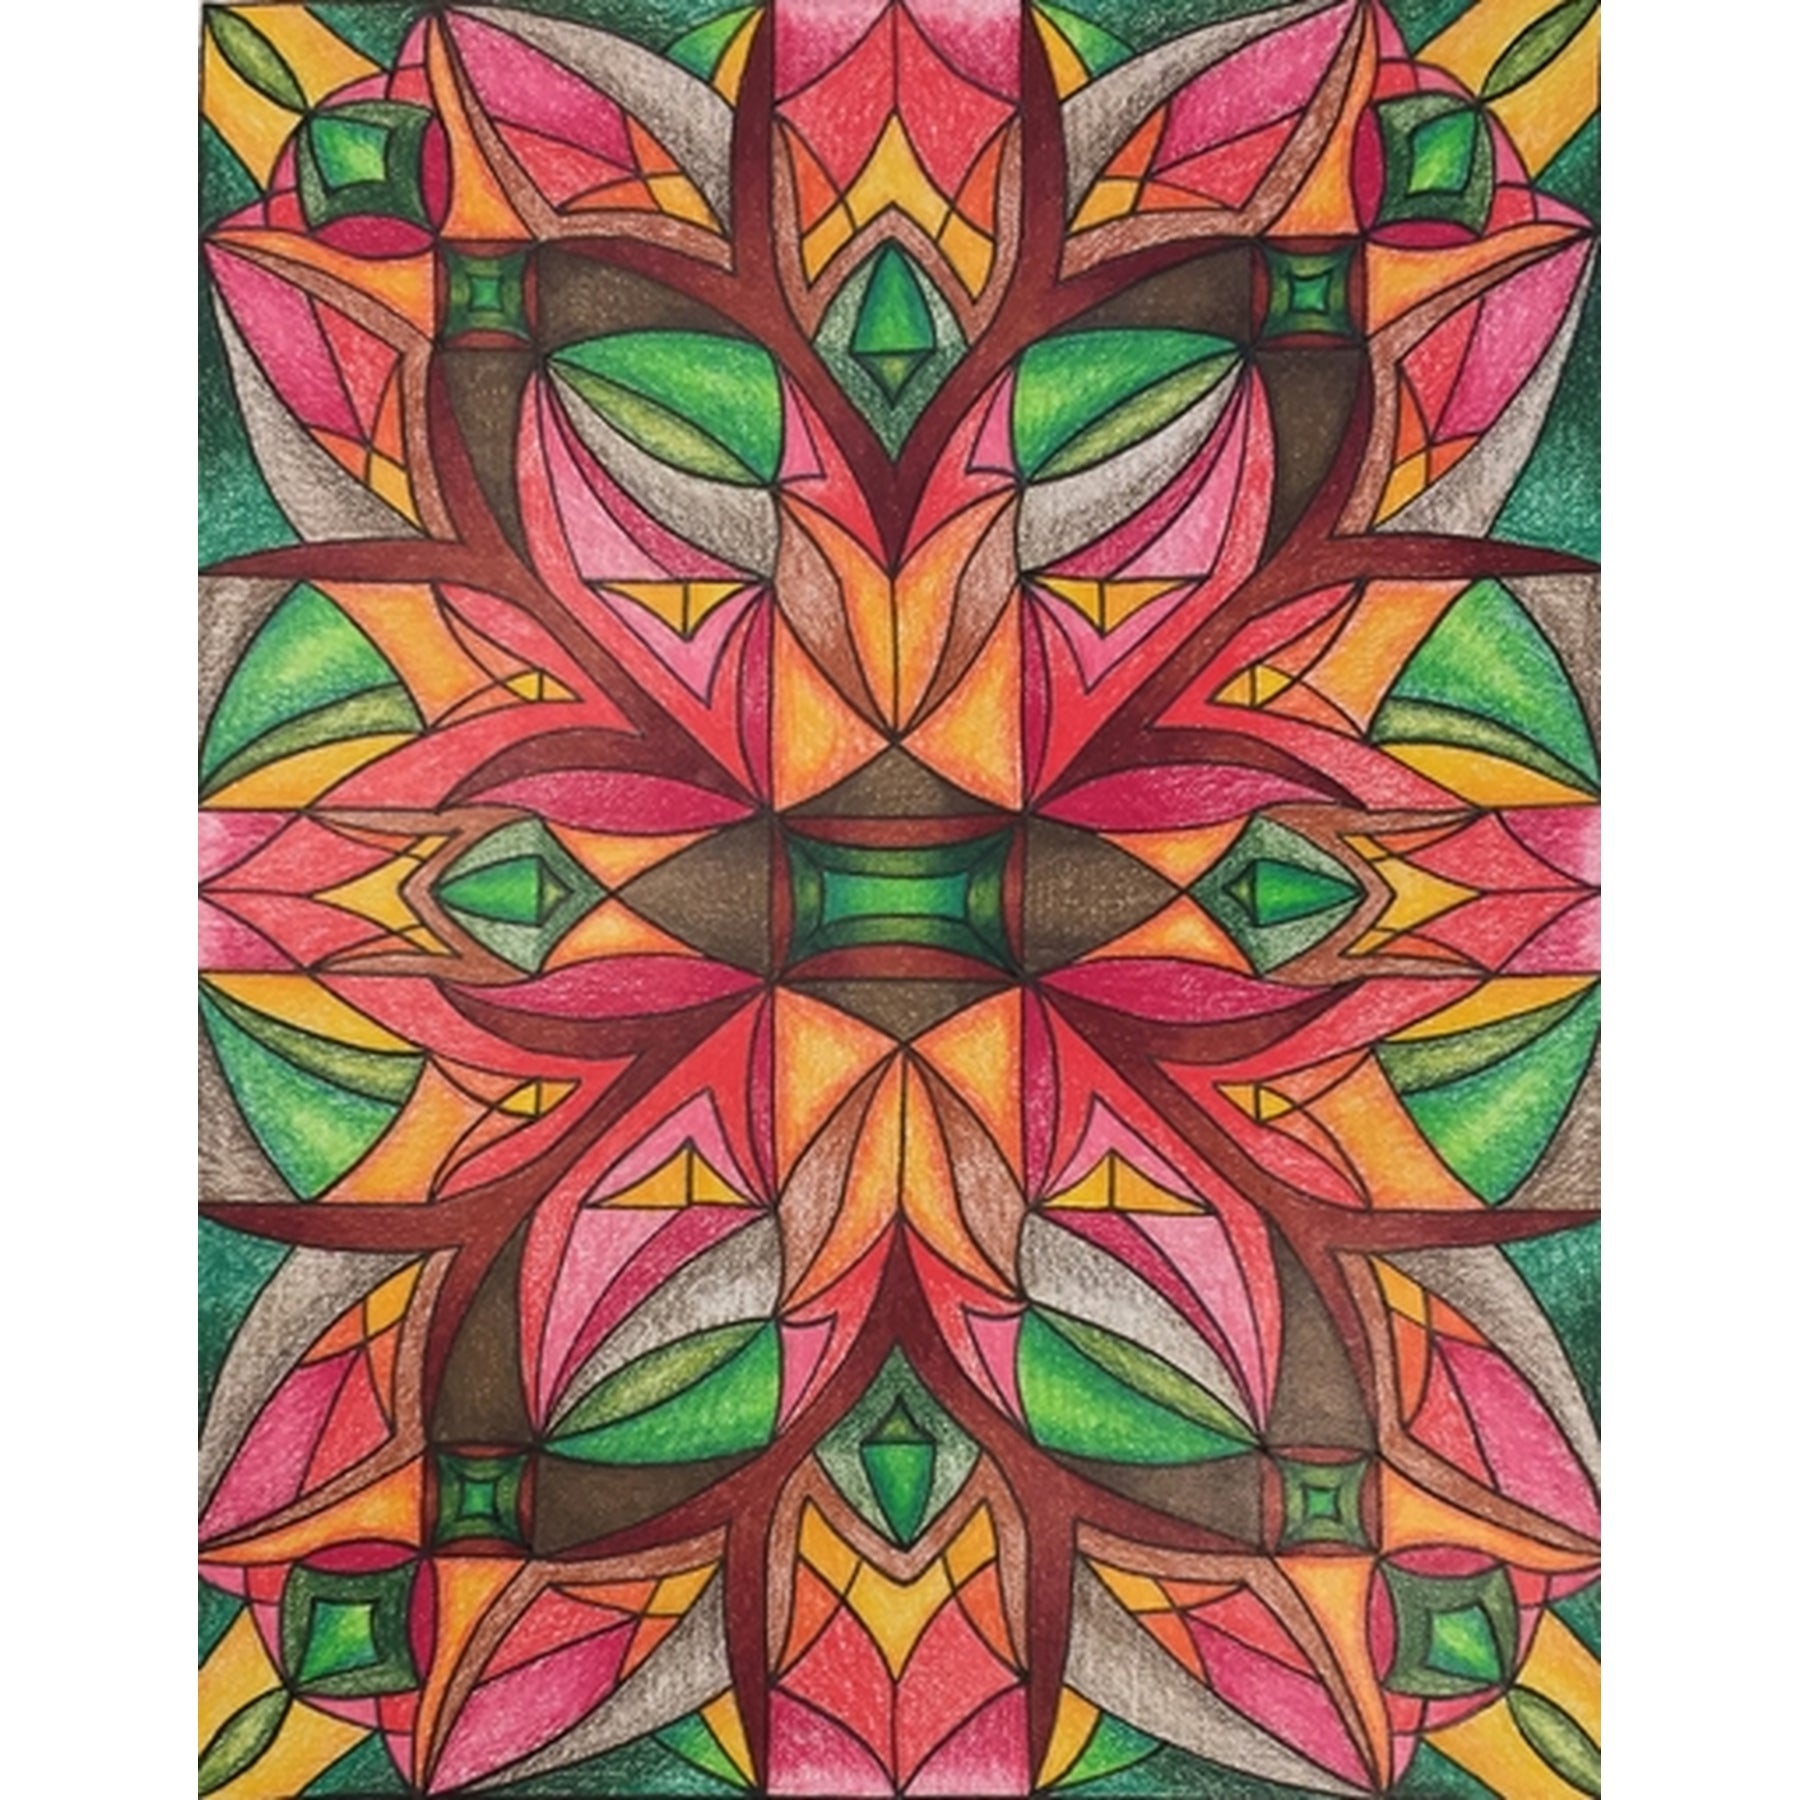 Peony, rug hooking pattern